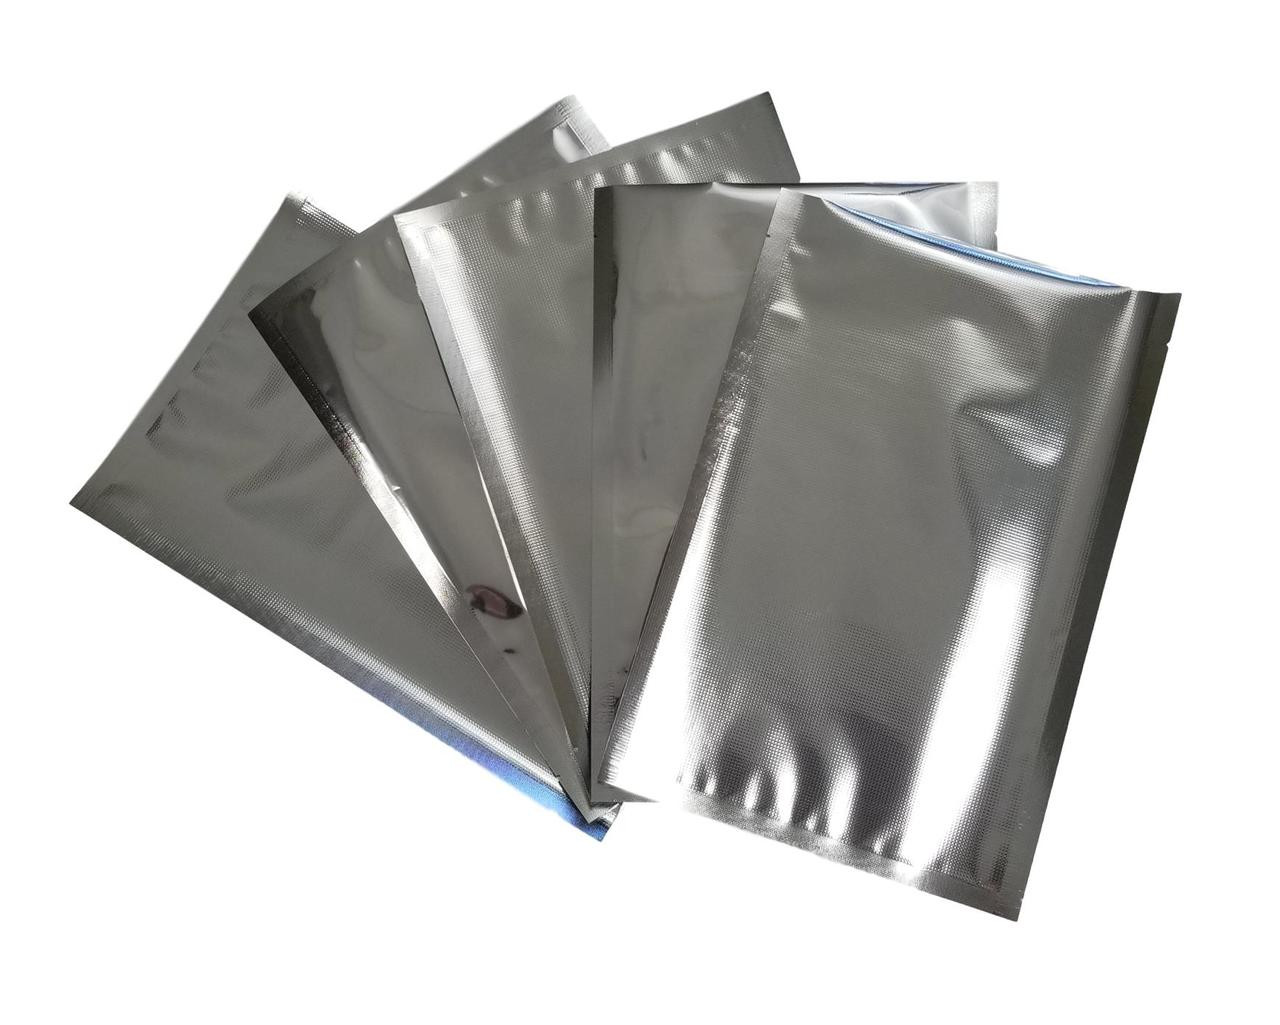 8x12 Quart Size Vacuum Sealer Bags - 1,000 Zipper Bag Bulk Case